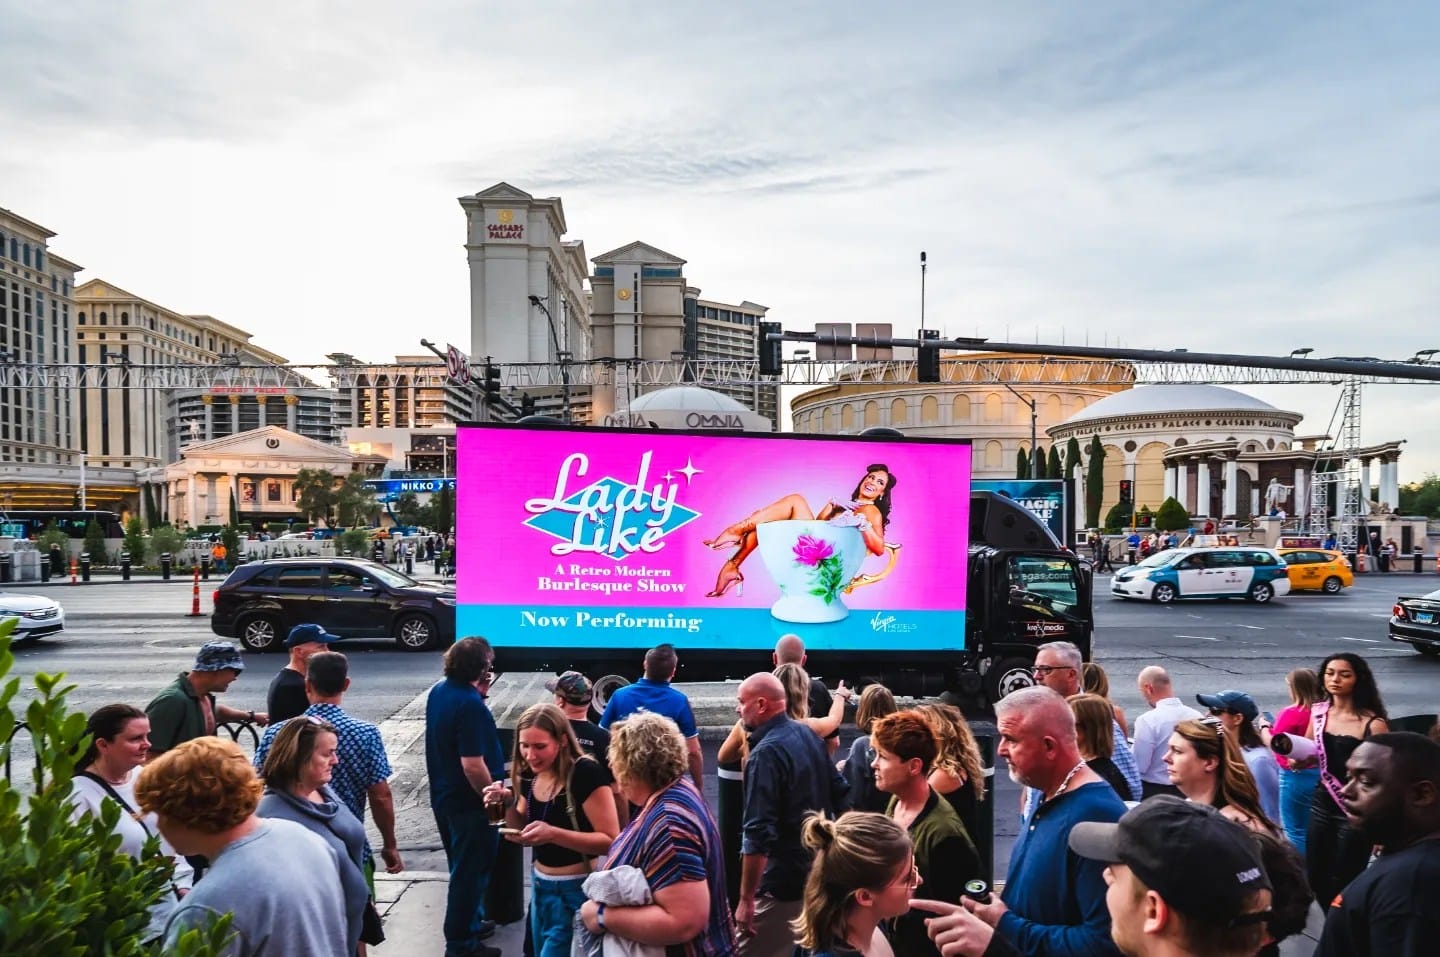 Crowd near billboard advertising Las Vegas show.